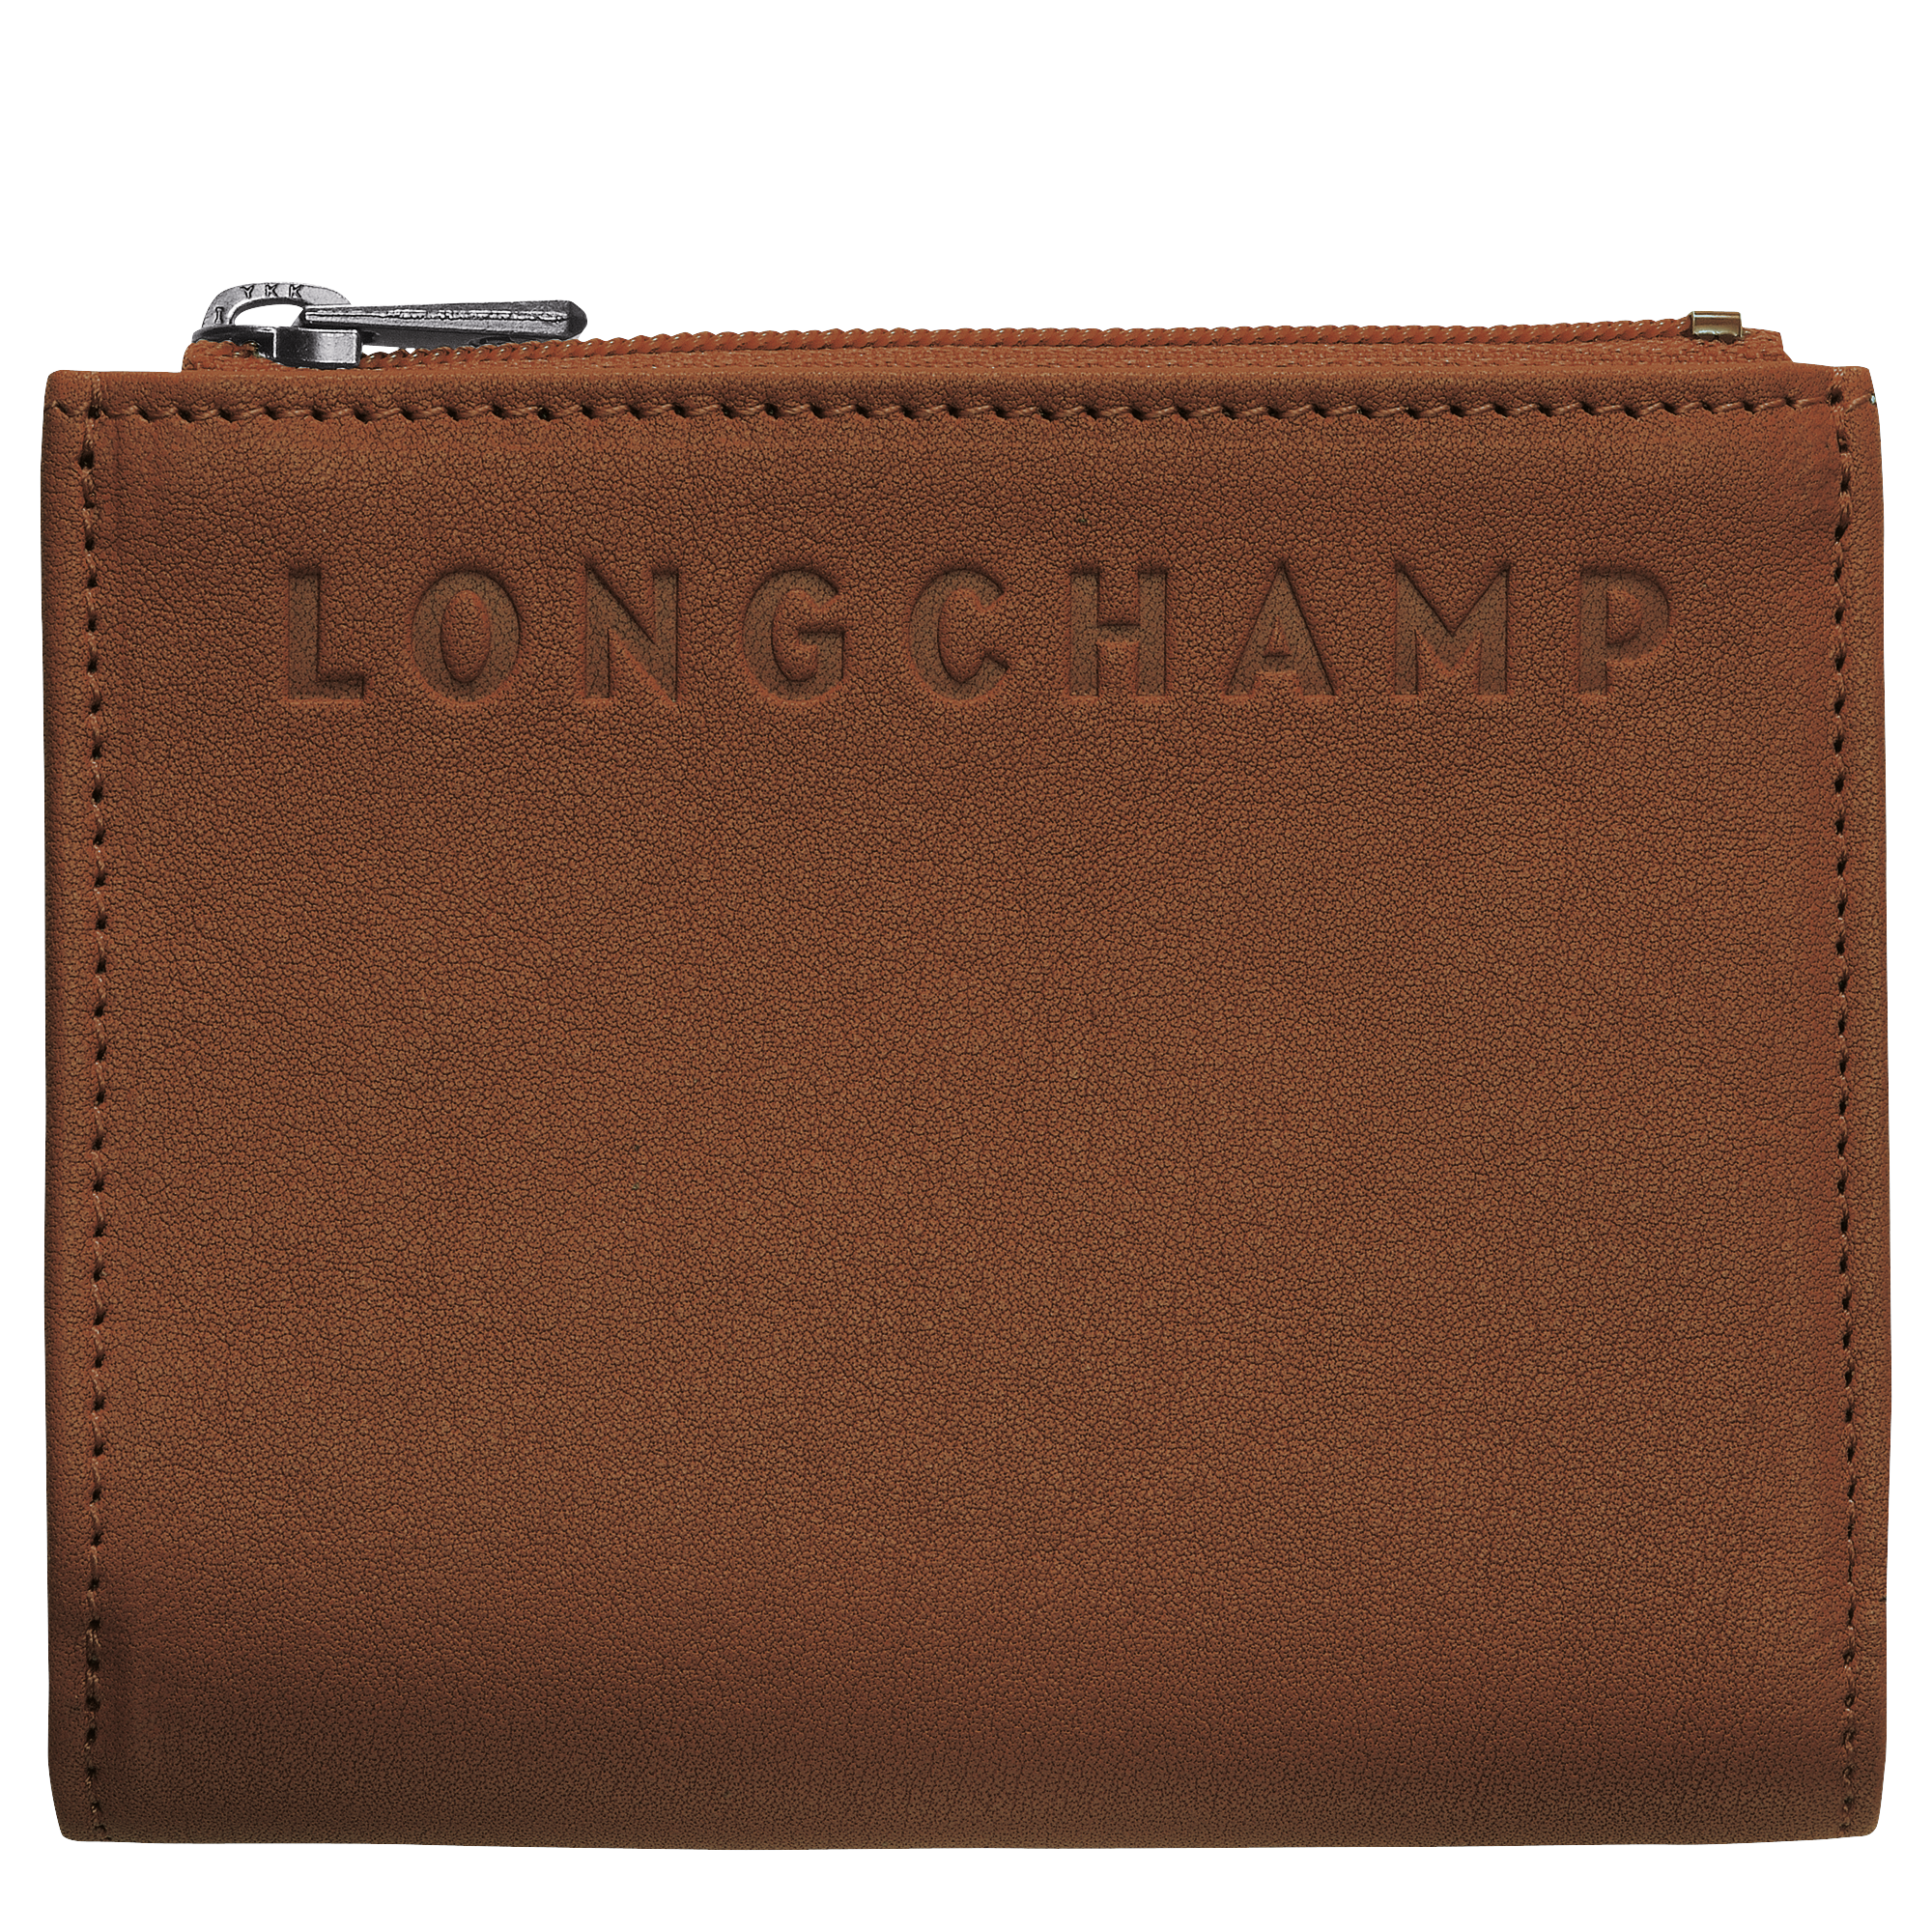 longchamp wallet australia